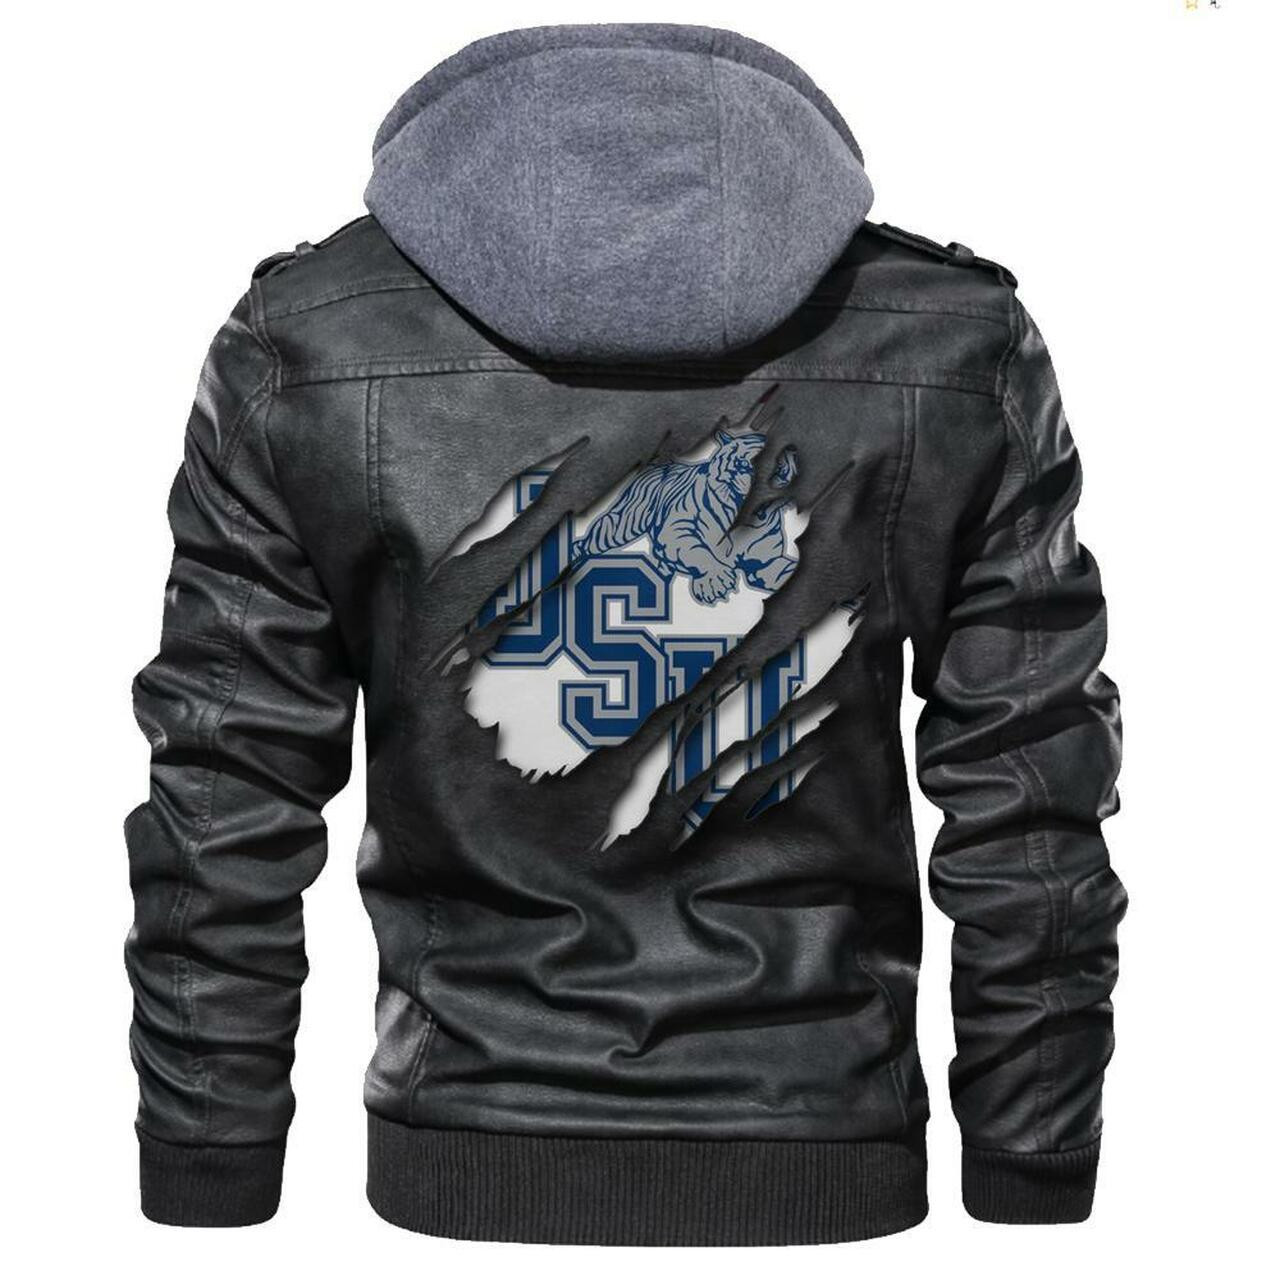 Top leather jacket Sells Best on Techcomshop 96